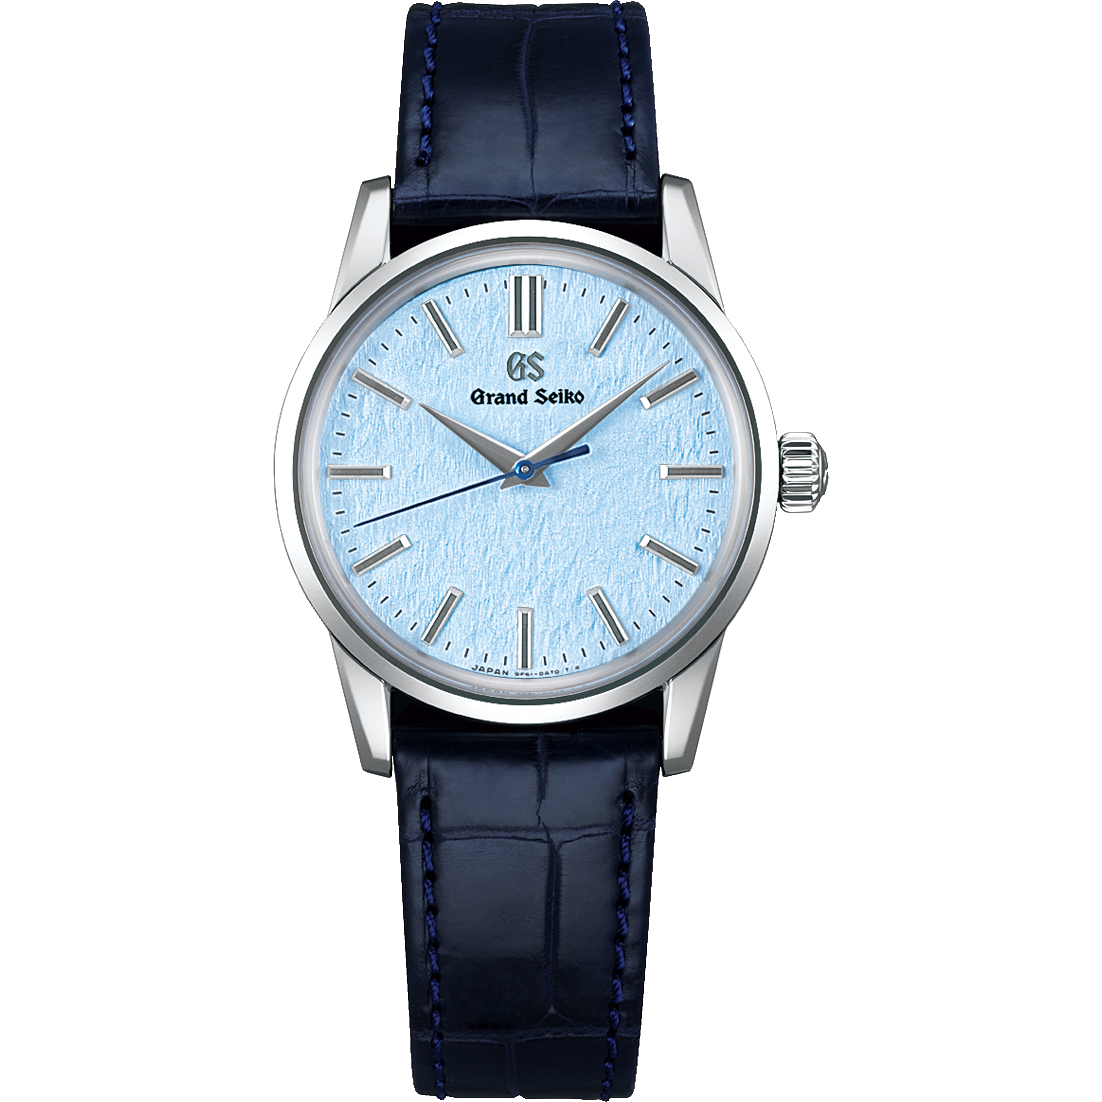 Grand Seiko Elegance Collection SBGX353 analog quartz 9F61 watch  2022.10 released - IPPO JAPAN WATCH 